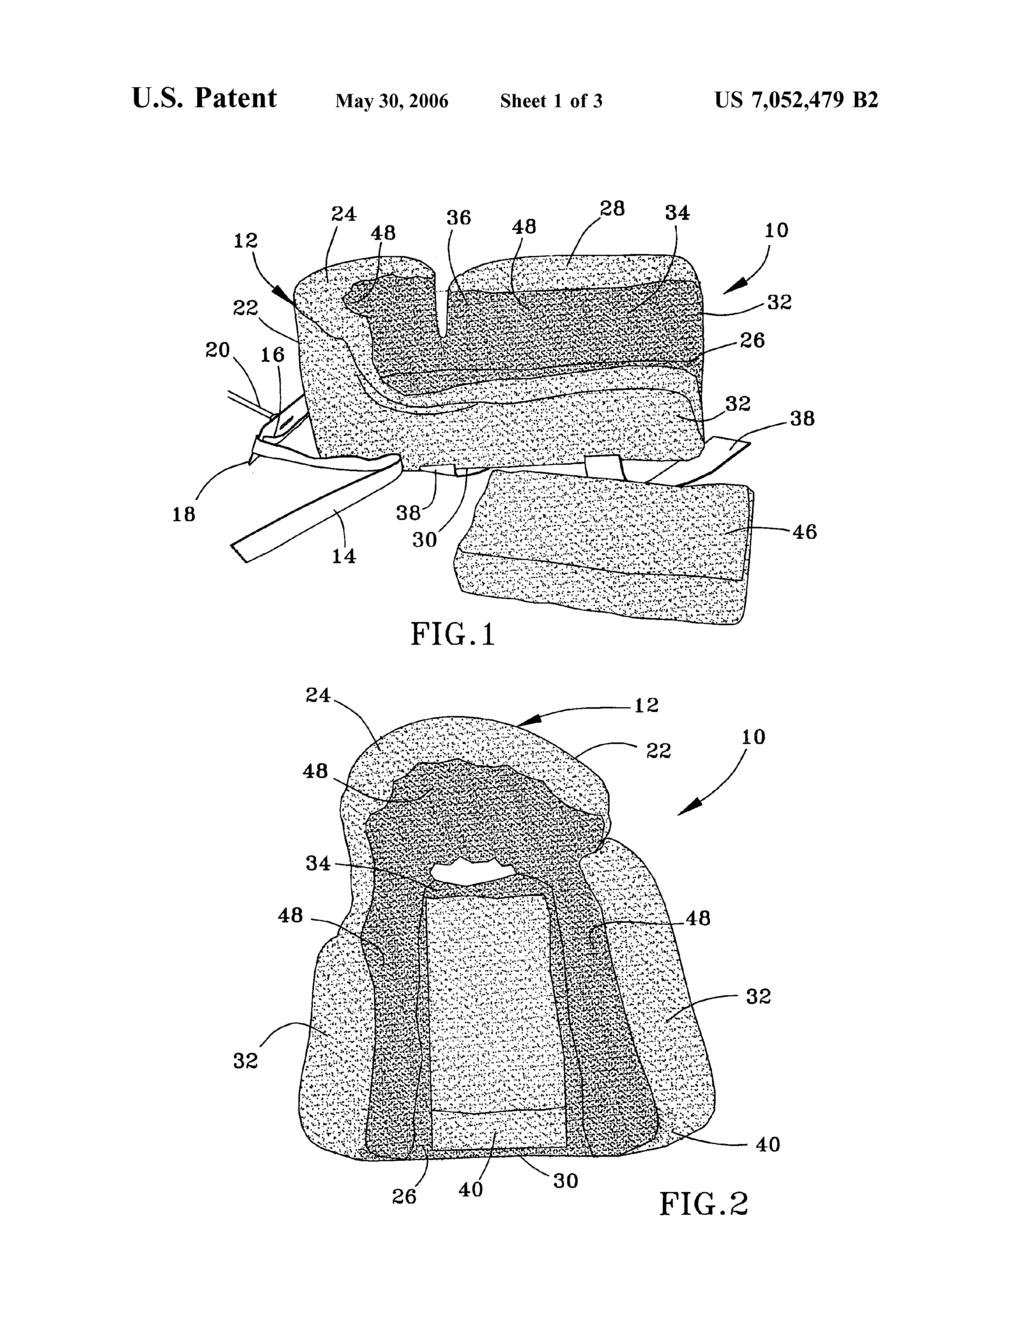 U.S. Patent May 30, 2006